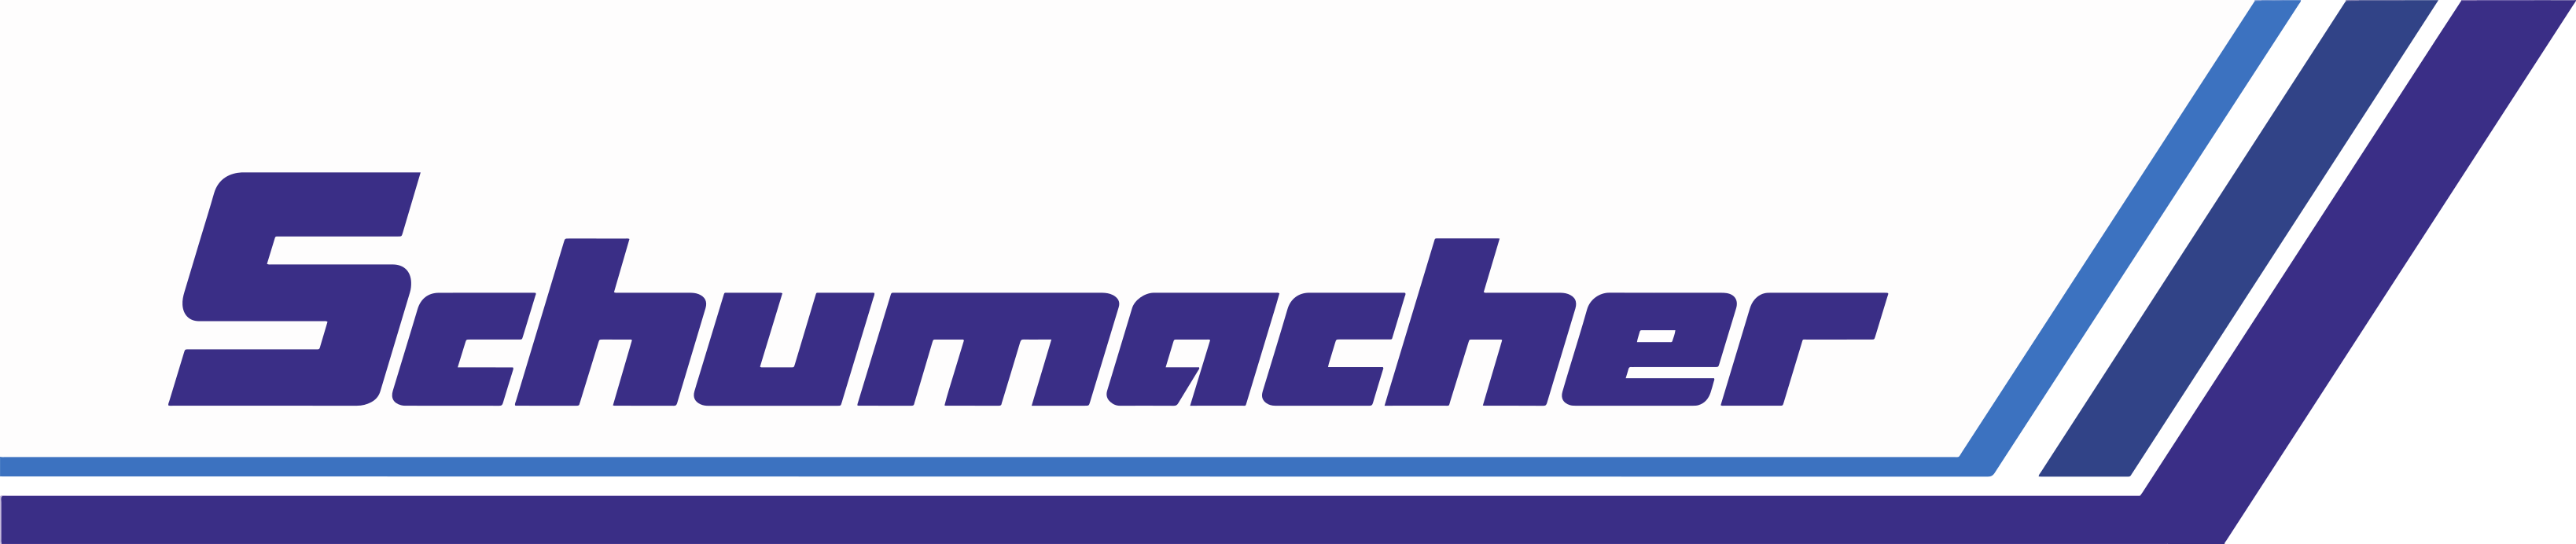 Schumacher-logo_EK_eps